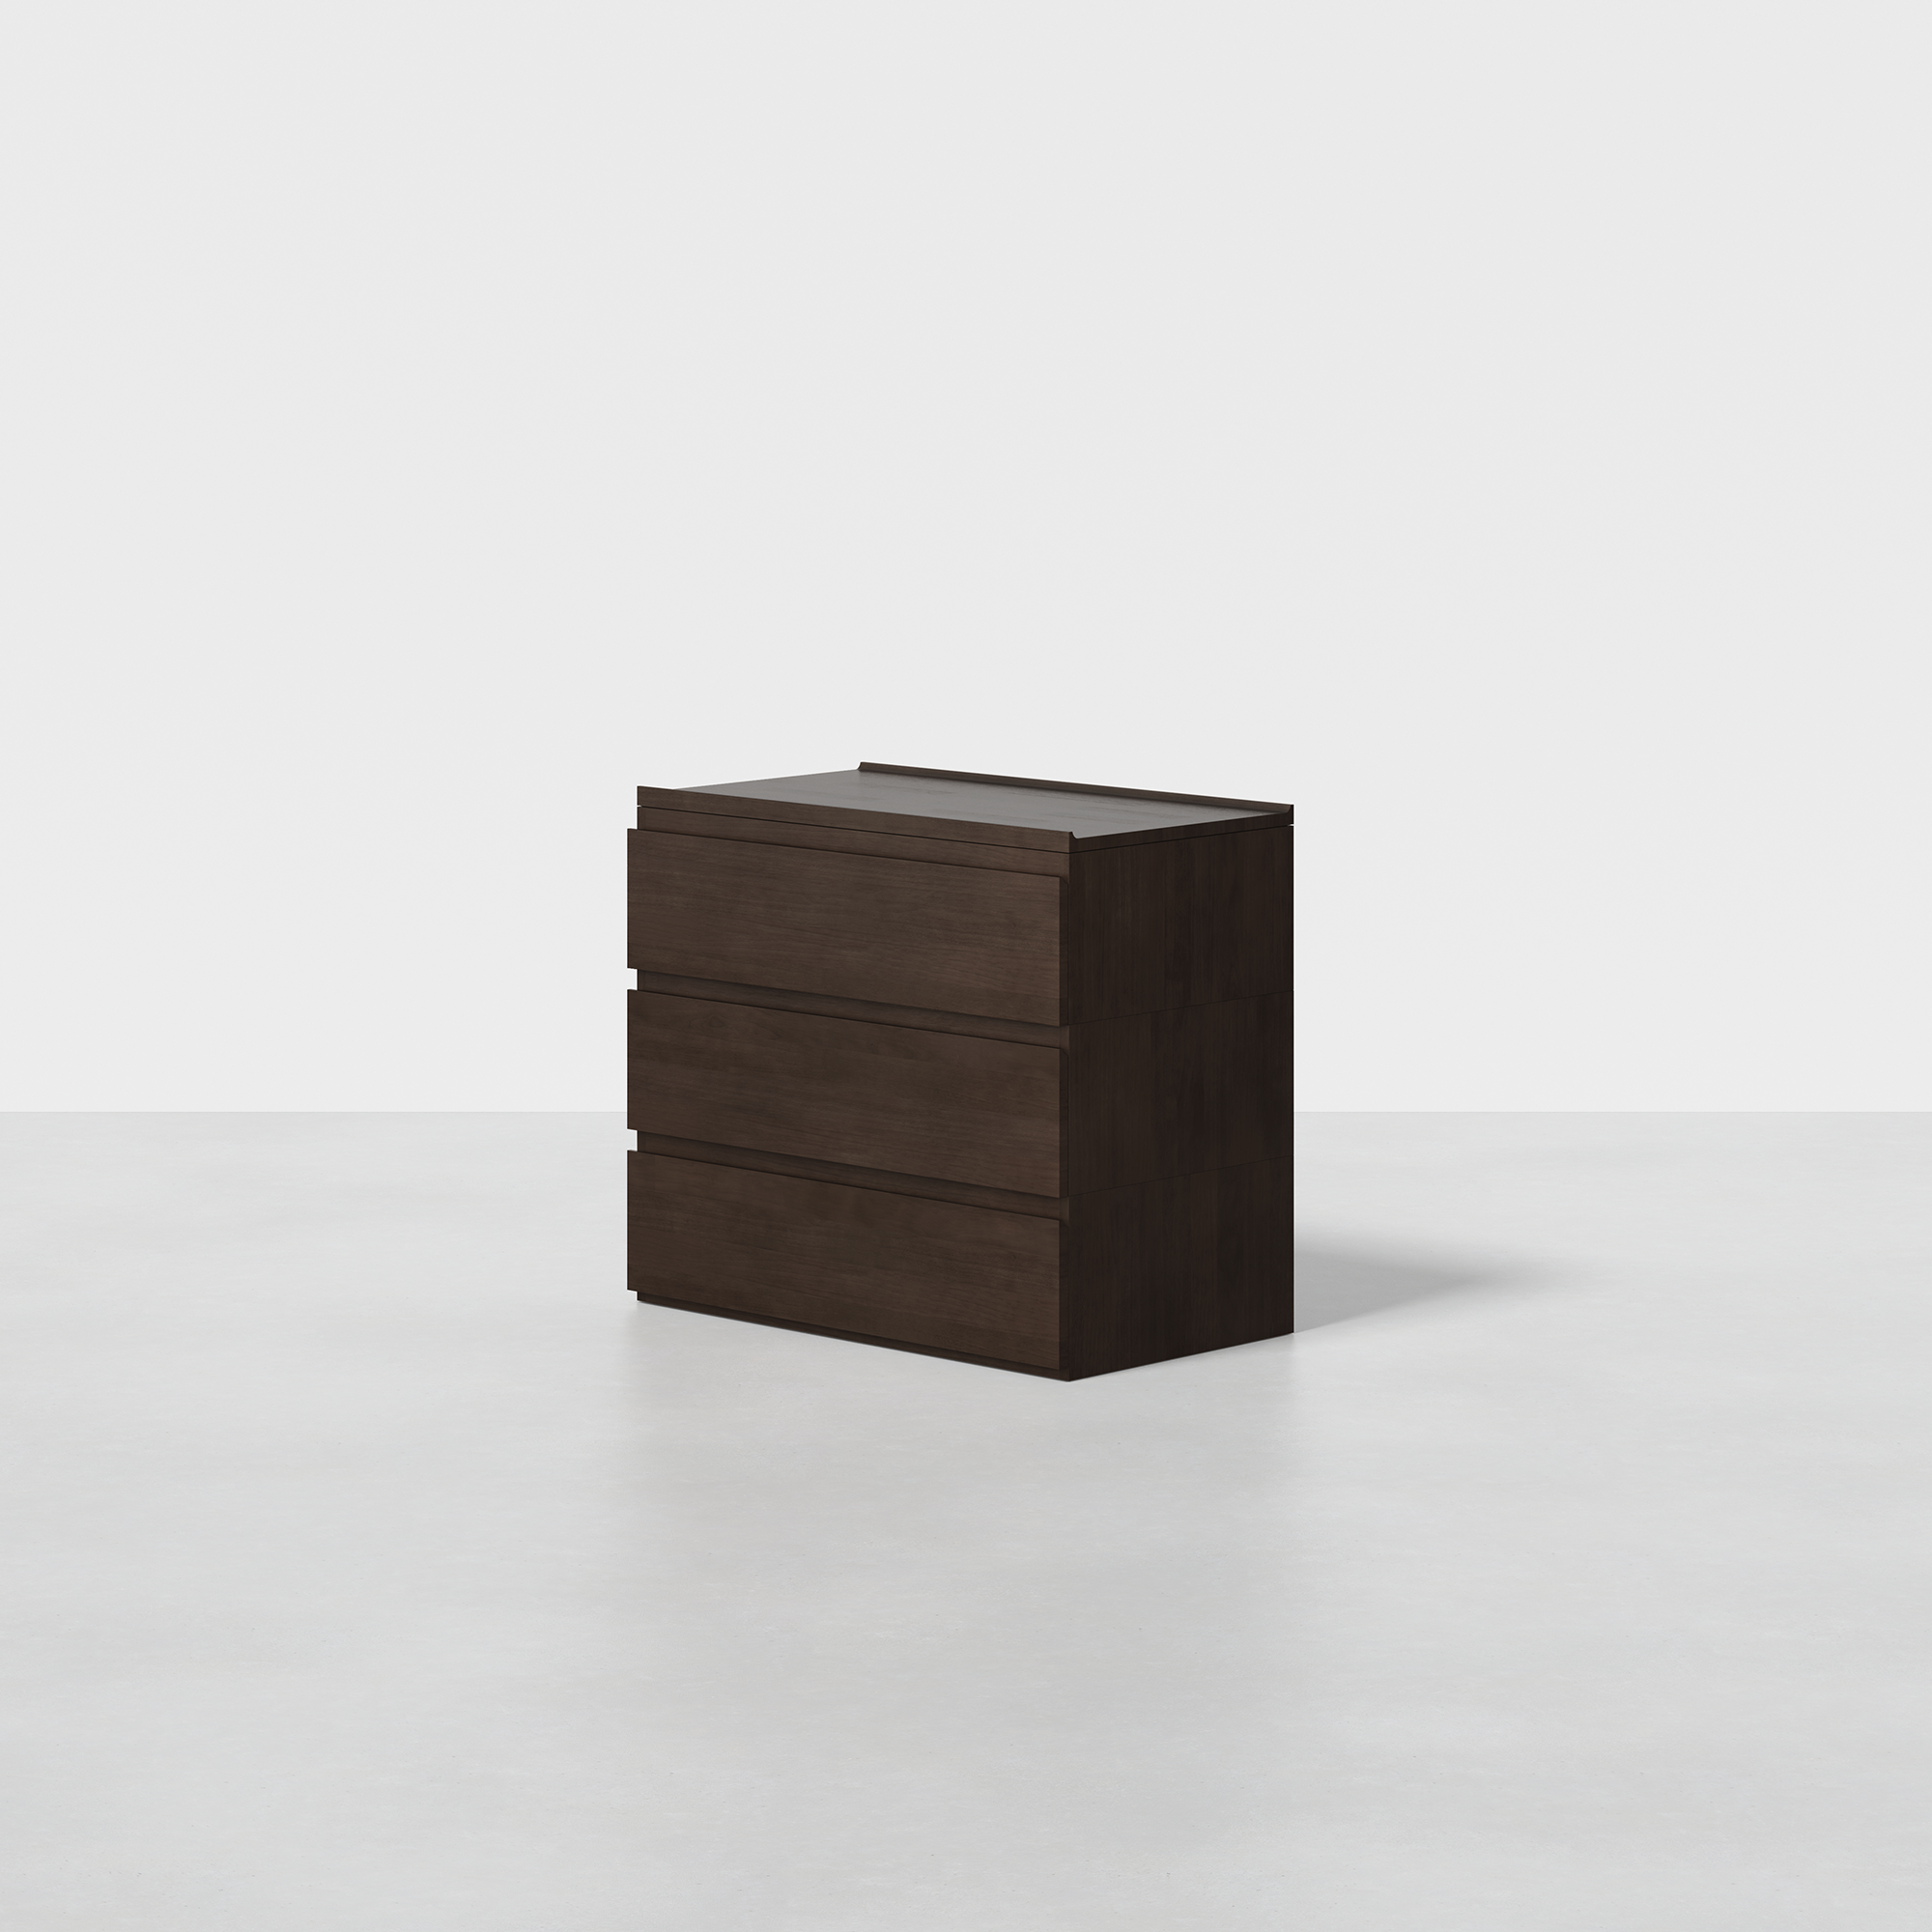 PDP Image: The Dresser (3x1 - Espresso) - Render - Angled